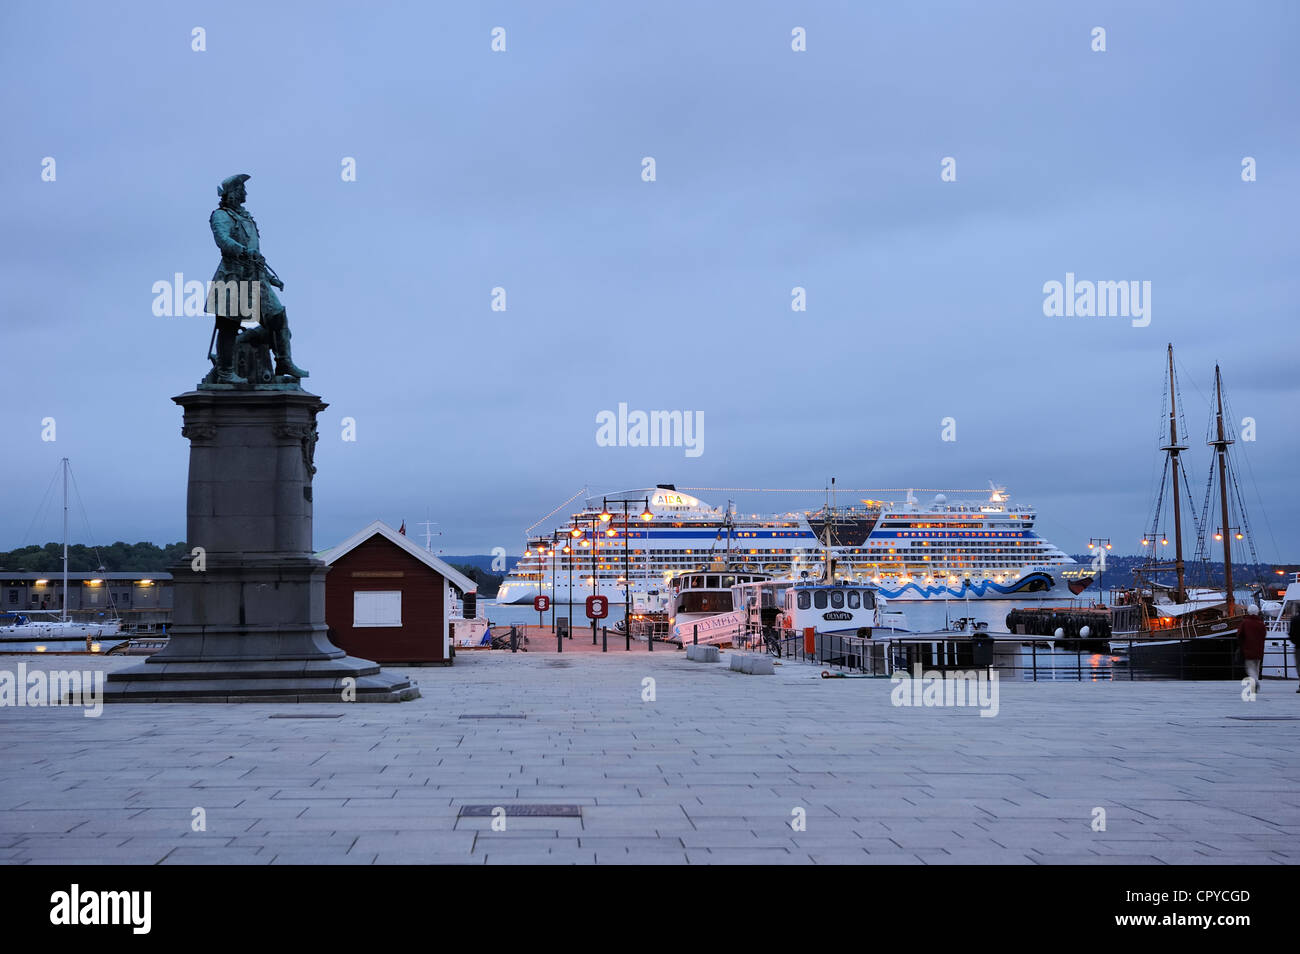 Norway, Oslo, statue of Peter Jansen Wessel alias Tordenskjold naval hero, on the harbour Stock Photo